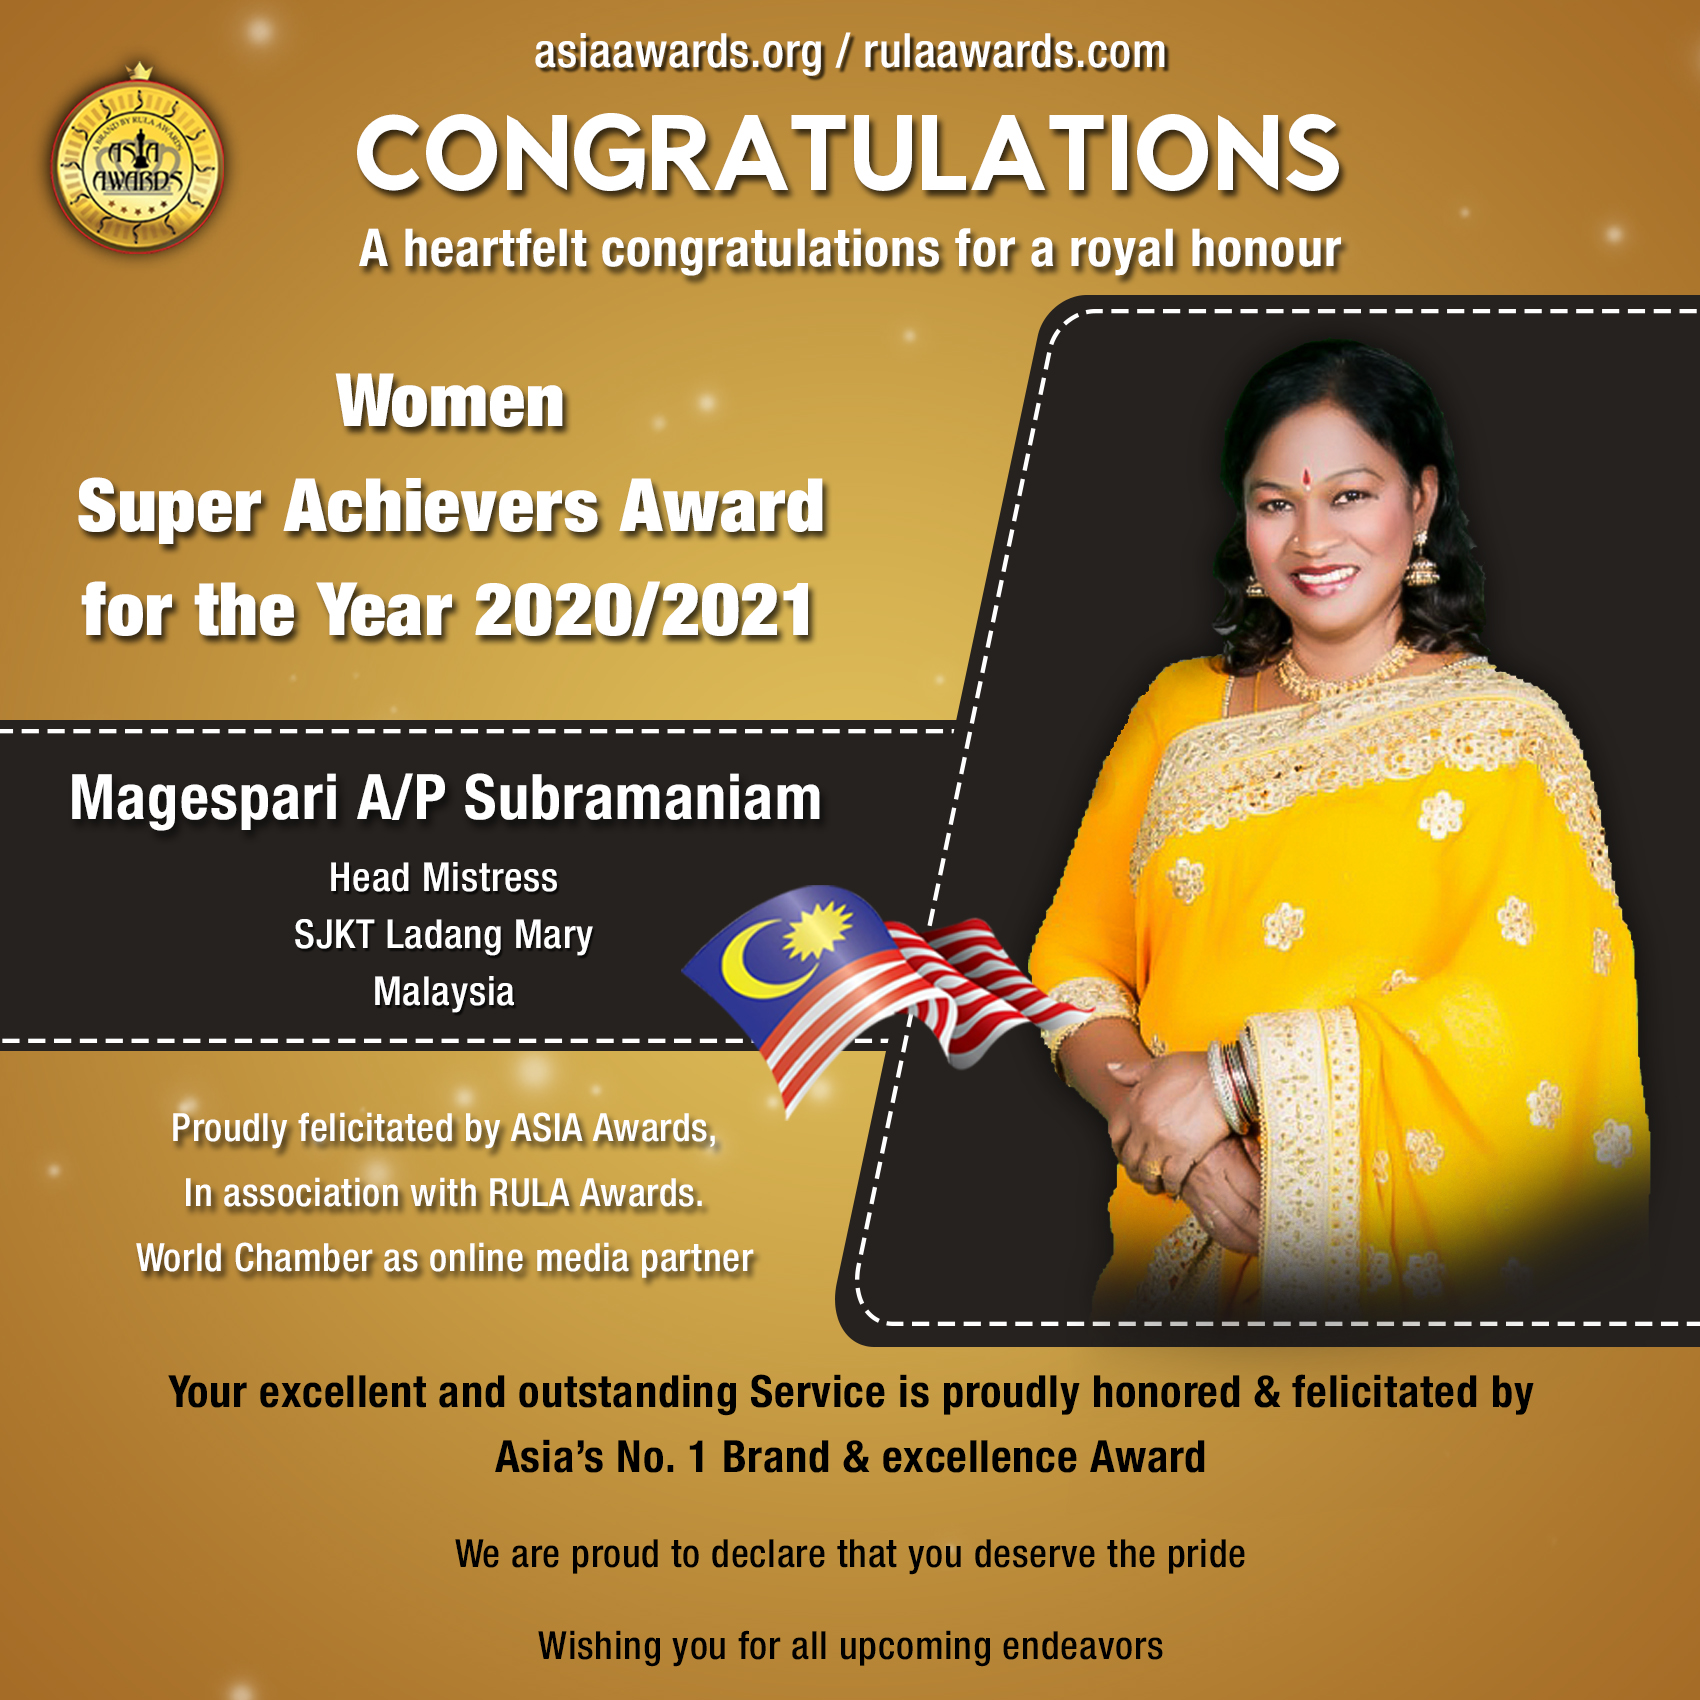 Magespari AP Subramaniam has bagged Women Super Achievers Award